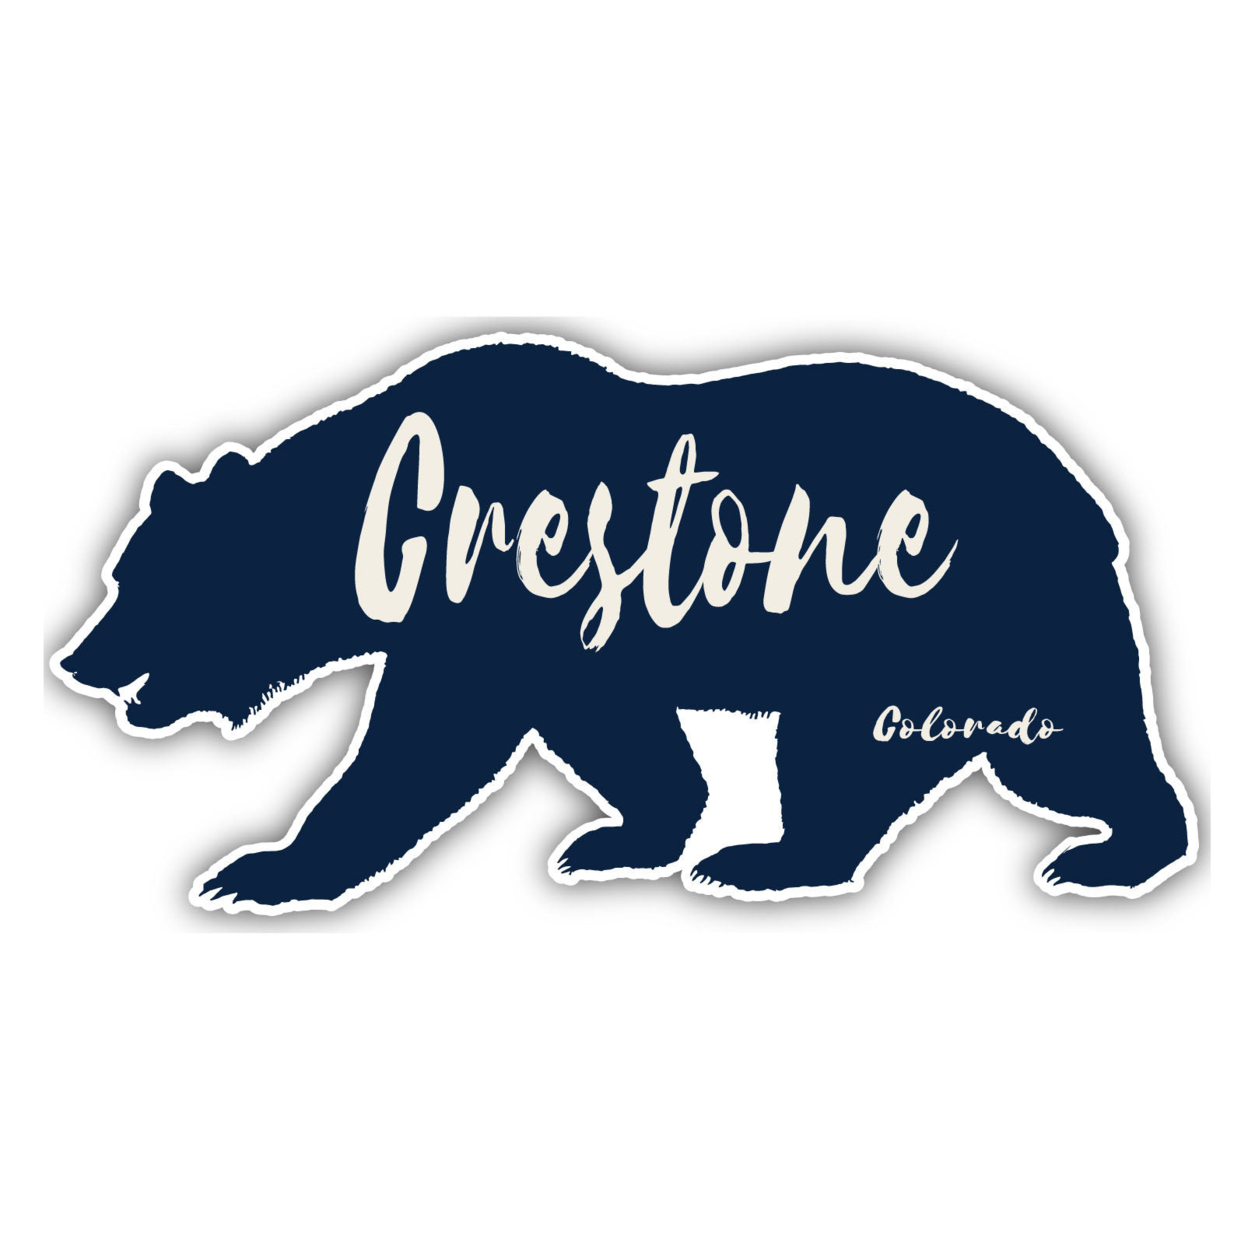 Crestone Colorado Souvenir Decorative Stickers (Choose Theme And Size) - Single Unit, 8-Inch, Camp Life